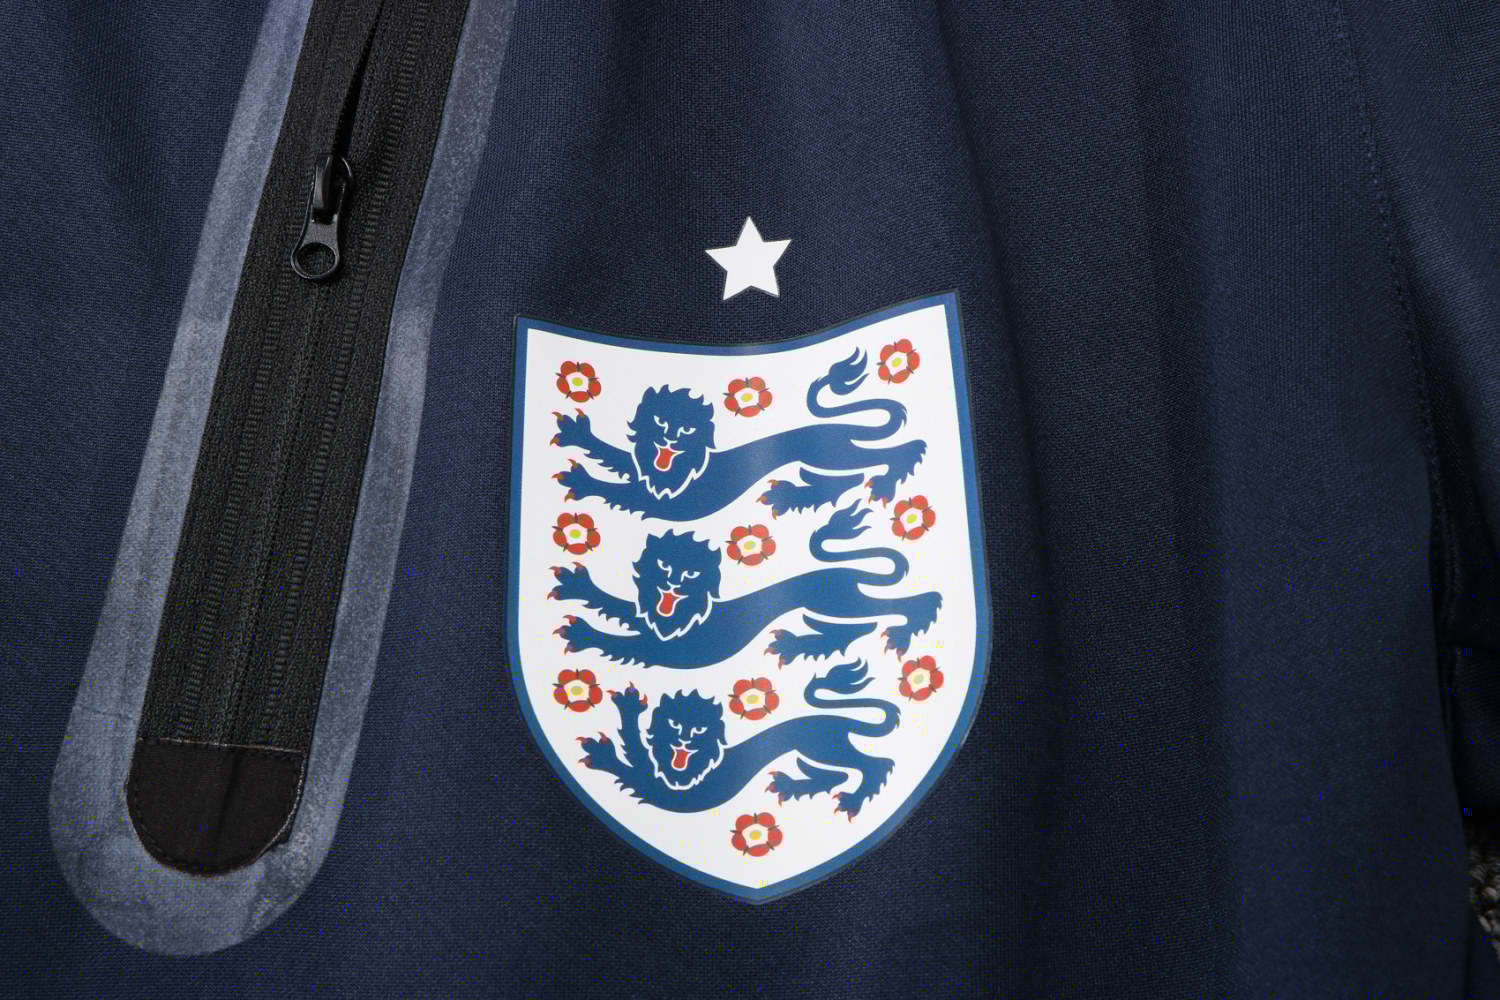 Men's England Hoodie Royal Training Suit Jacket + Pants 2022